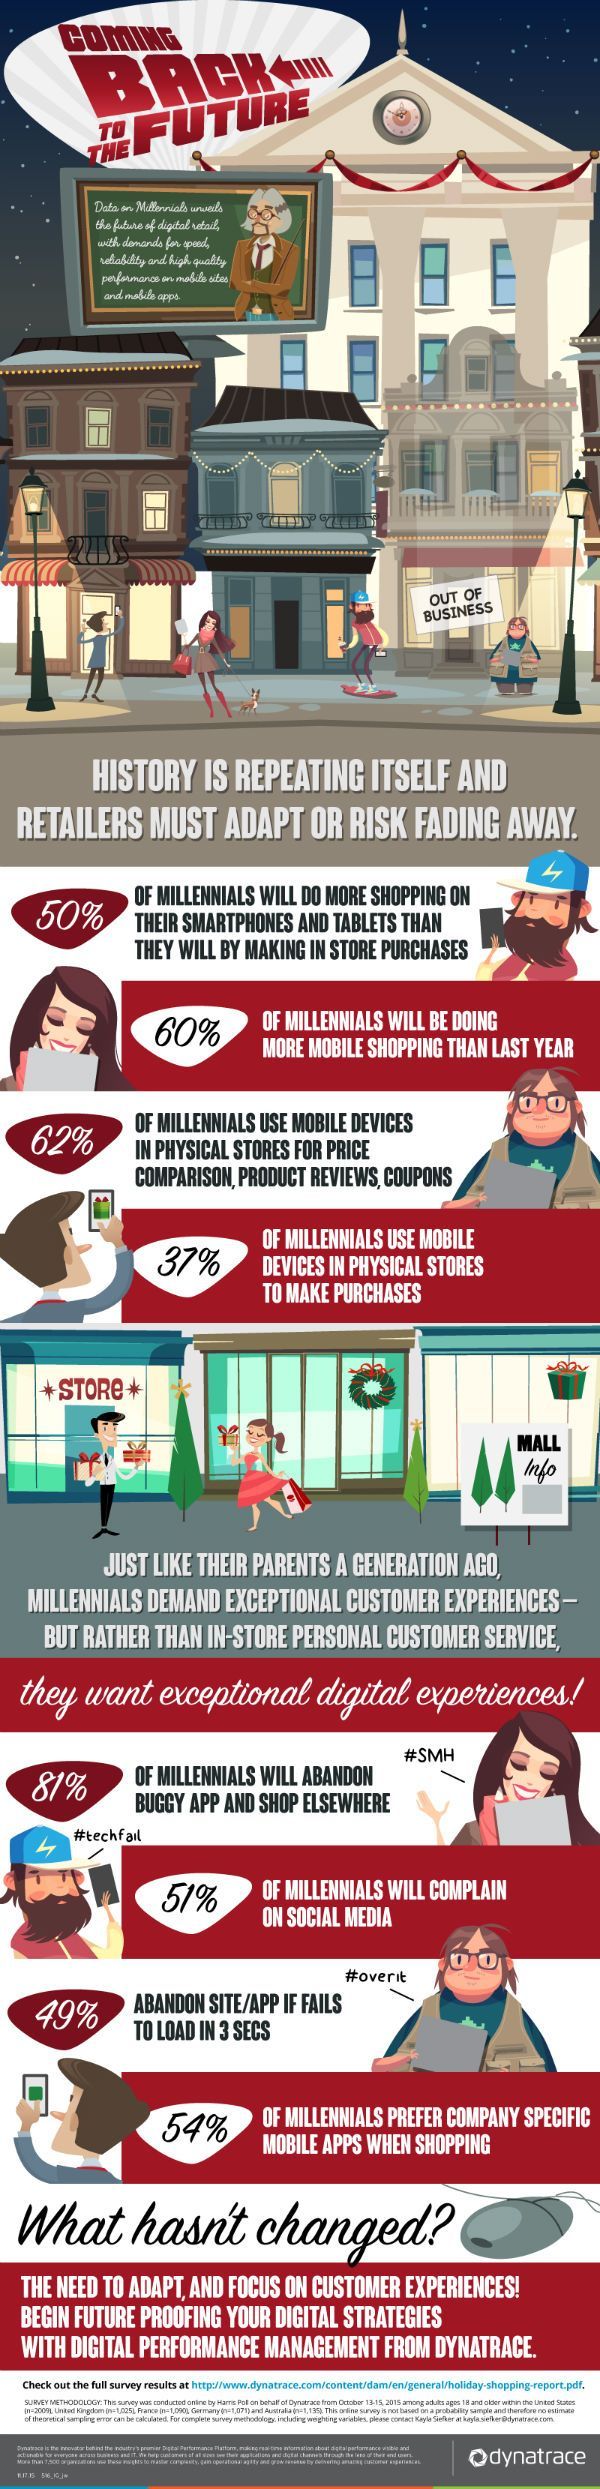 comercio_móvil_millennials_infografía